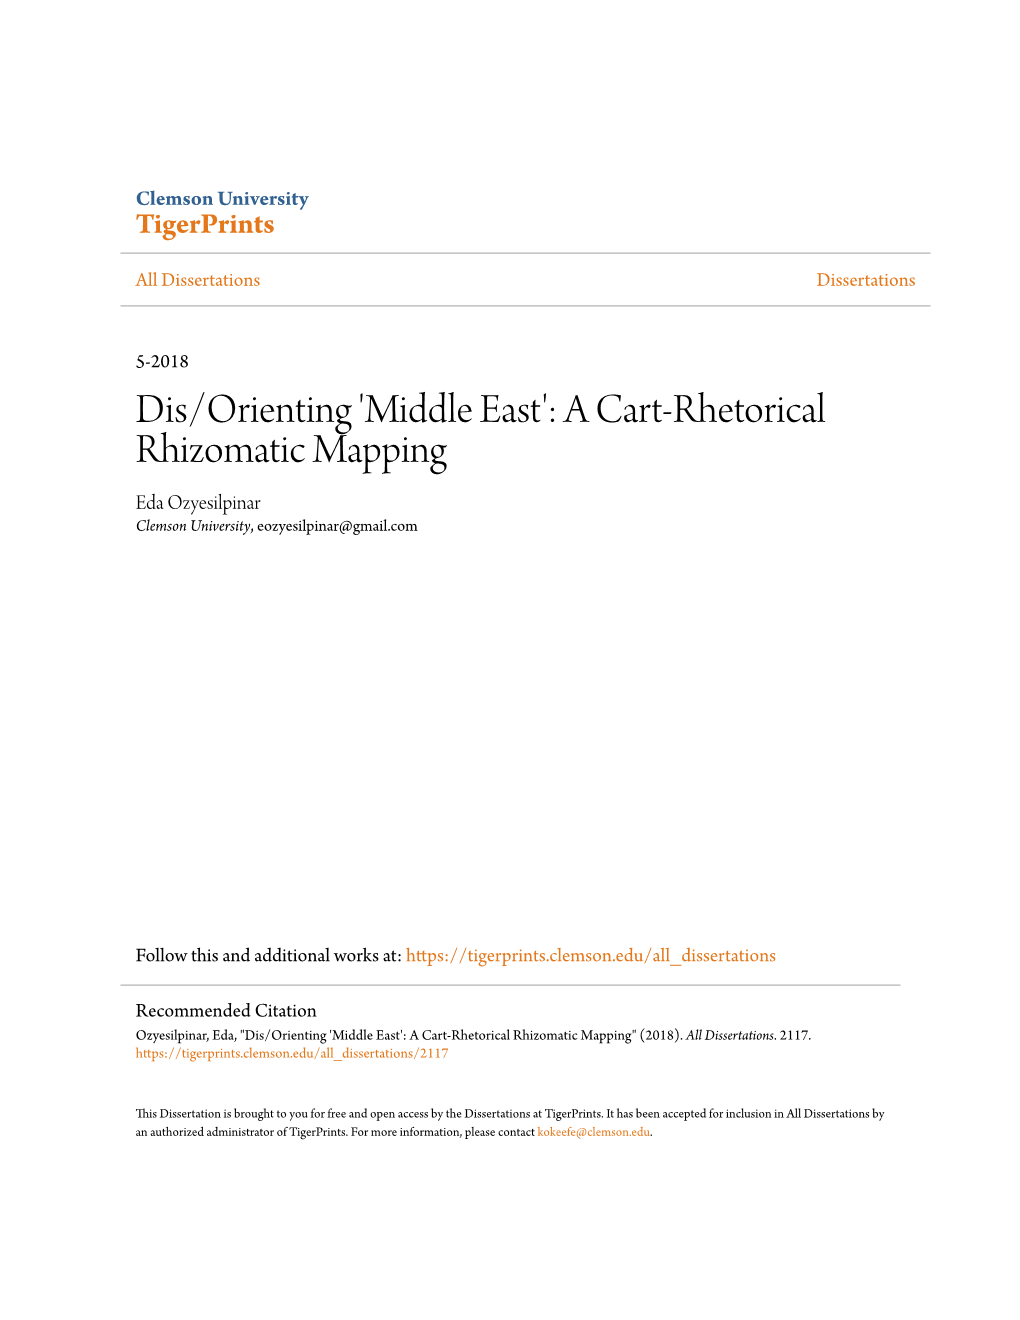 Dis/Orienting 'Middle East': a Cart-Rhetorical Rhizomatic Mapping Eda Ozyesilpinar Clemson University, Eozyesilpinar@Gmail.Com